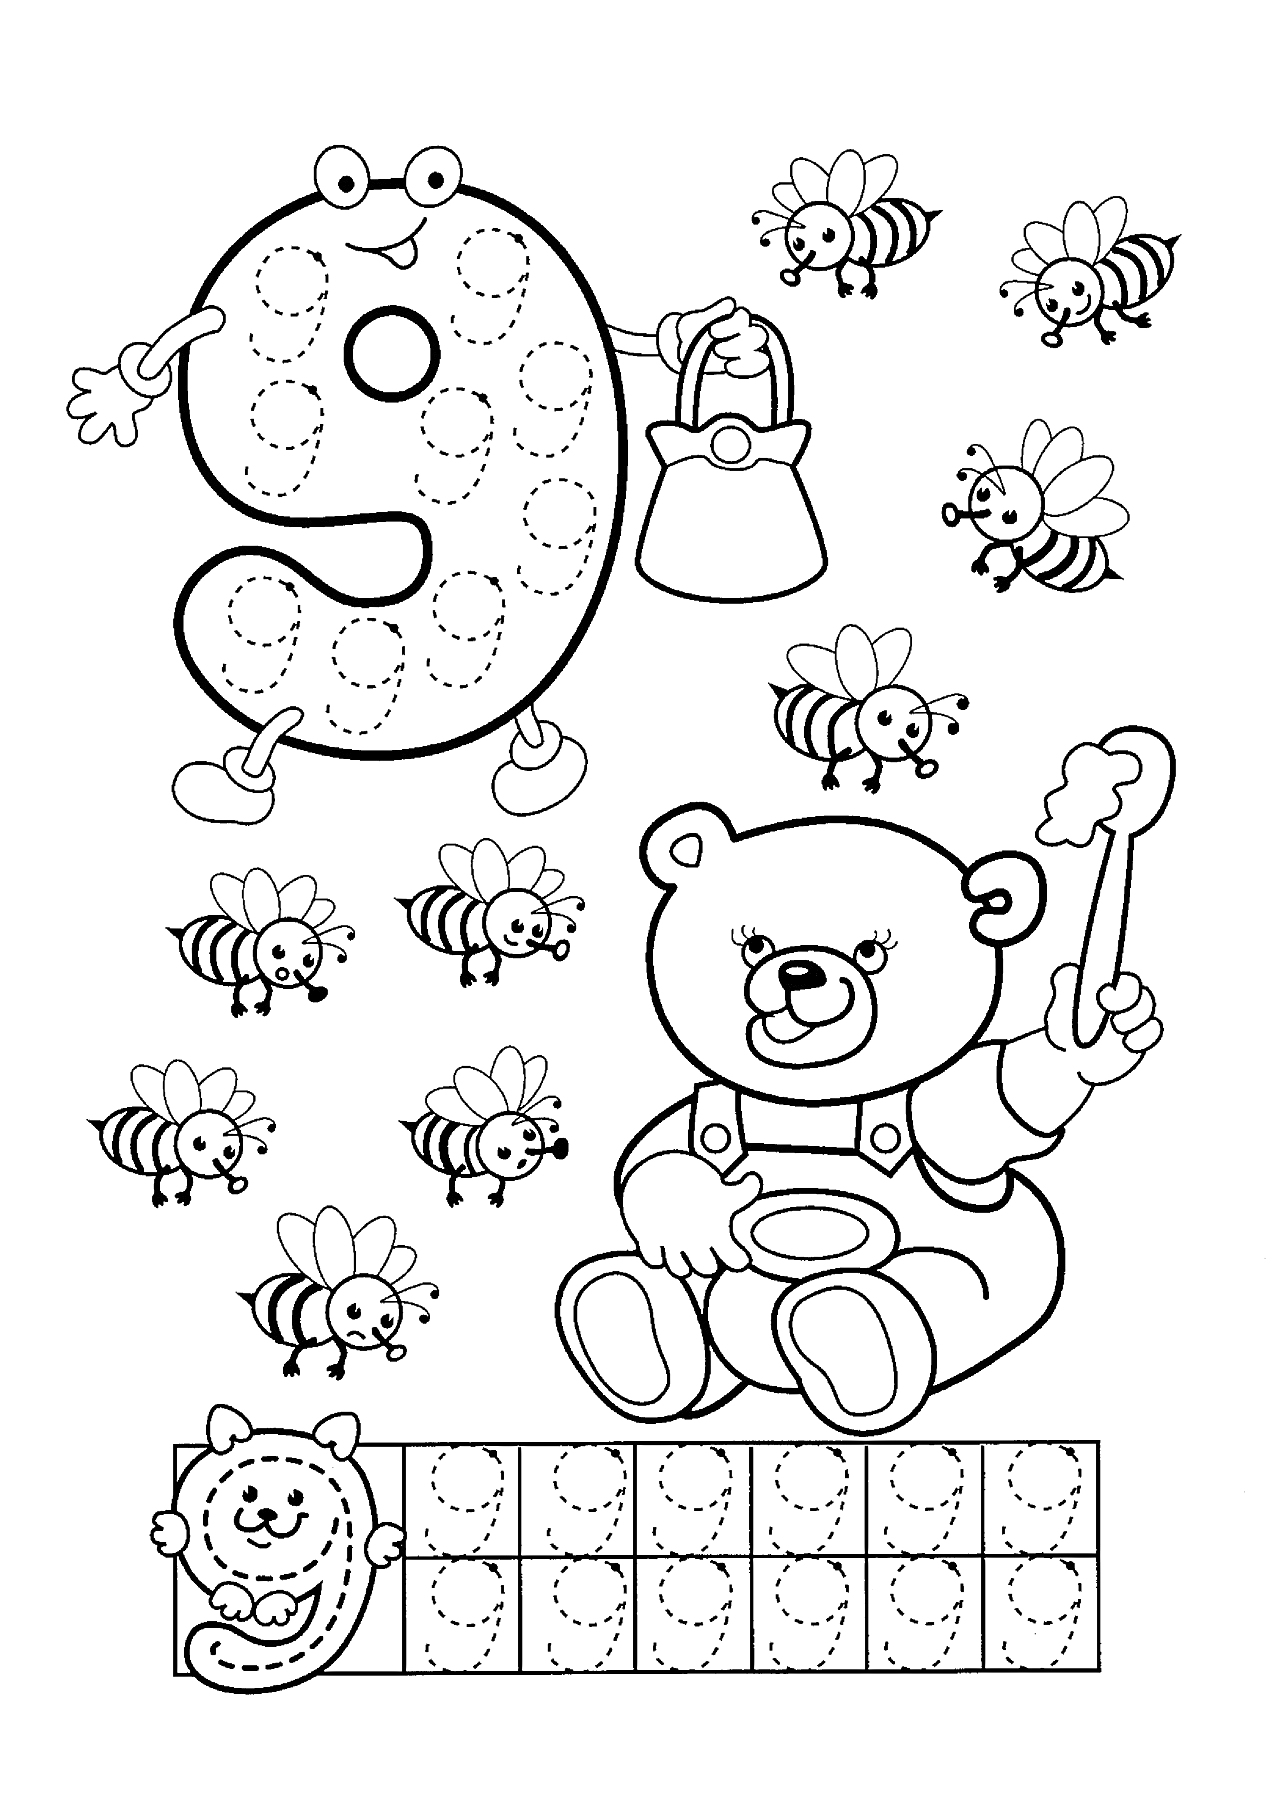 На раскраске изображено: Цифра 9, Пчёлы, Медведь, Кот, Учеба